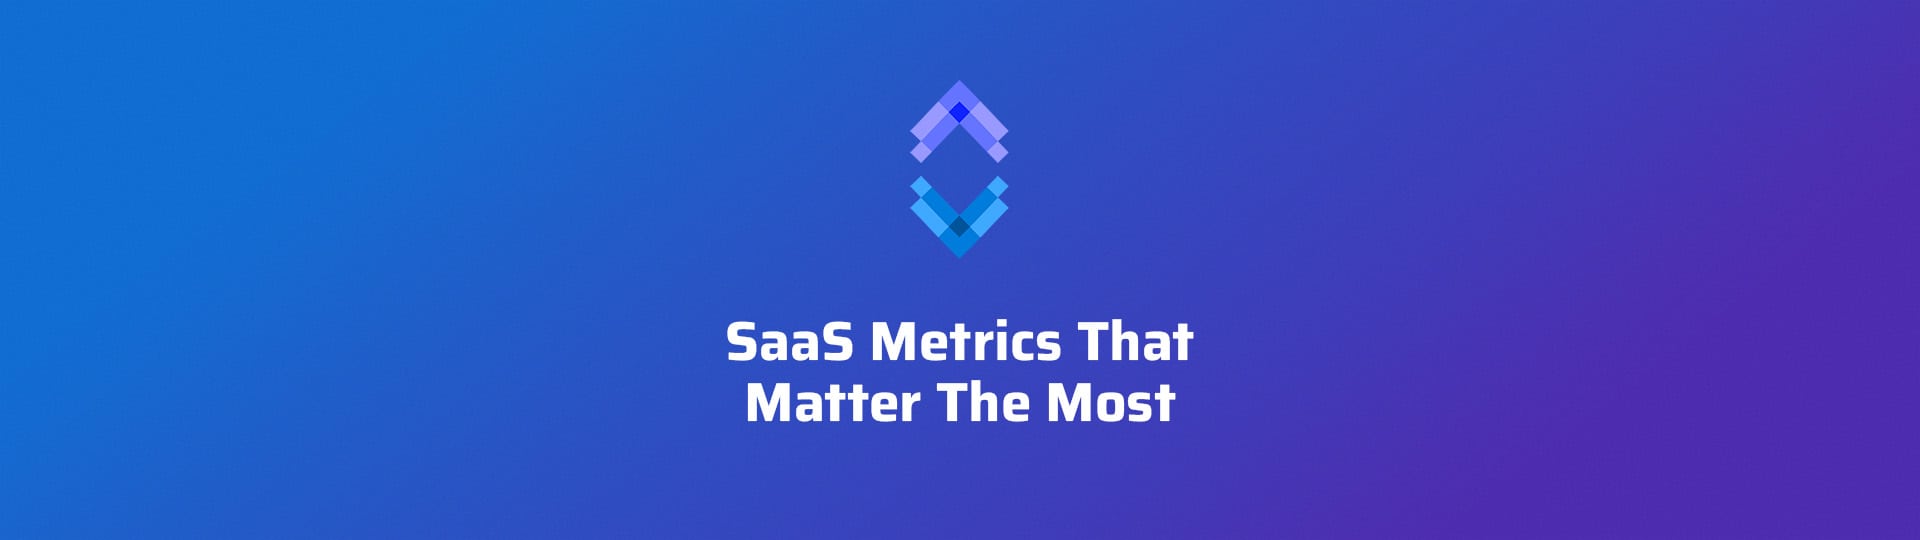 SaaS Metrics That Matter The Most